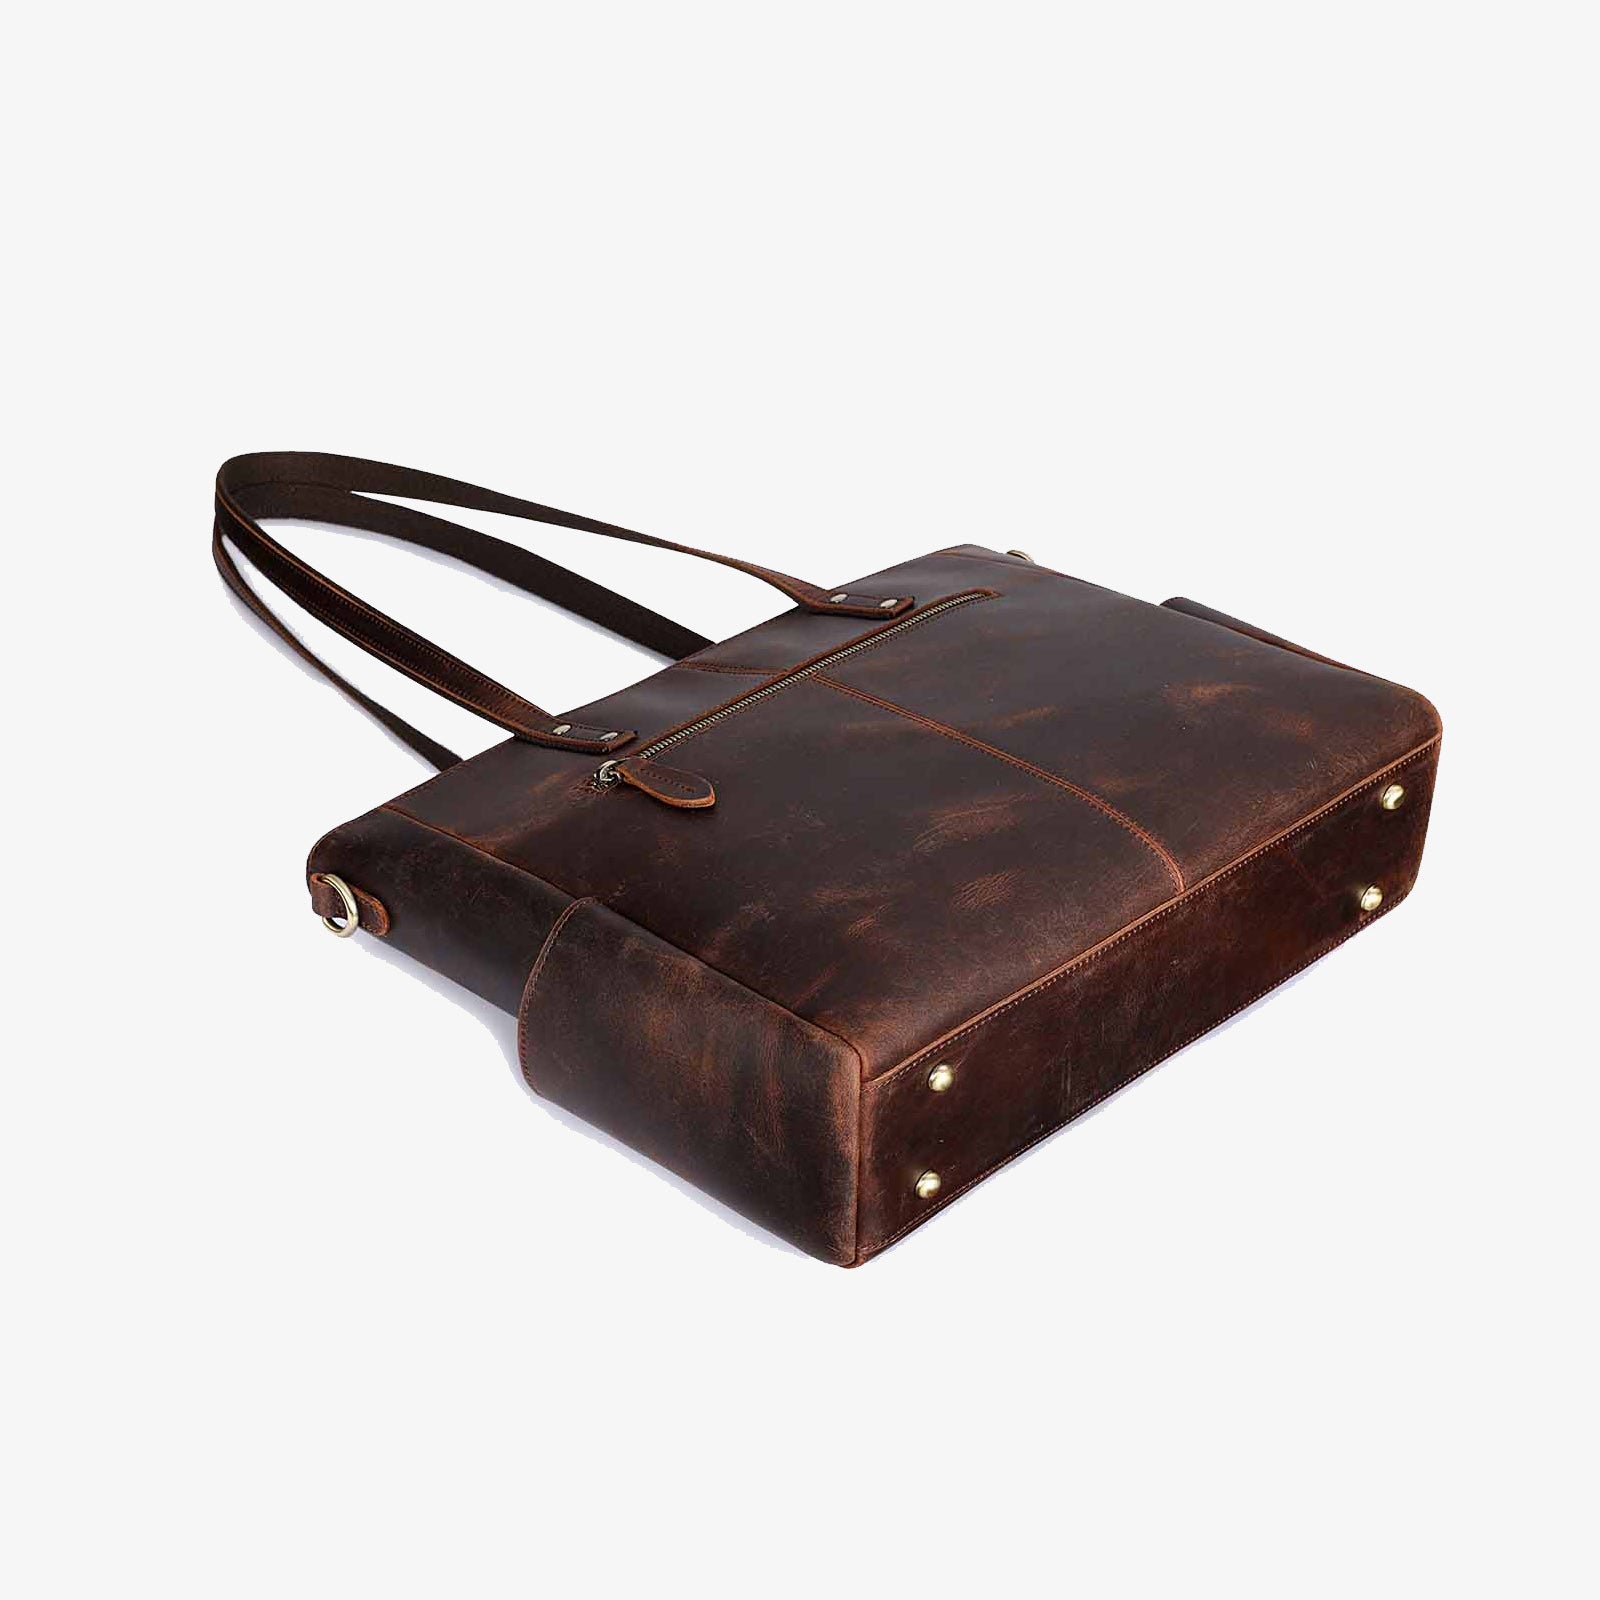 Genuine Leather Laptop Tote Bag Women